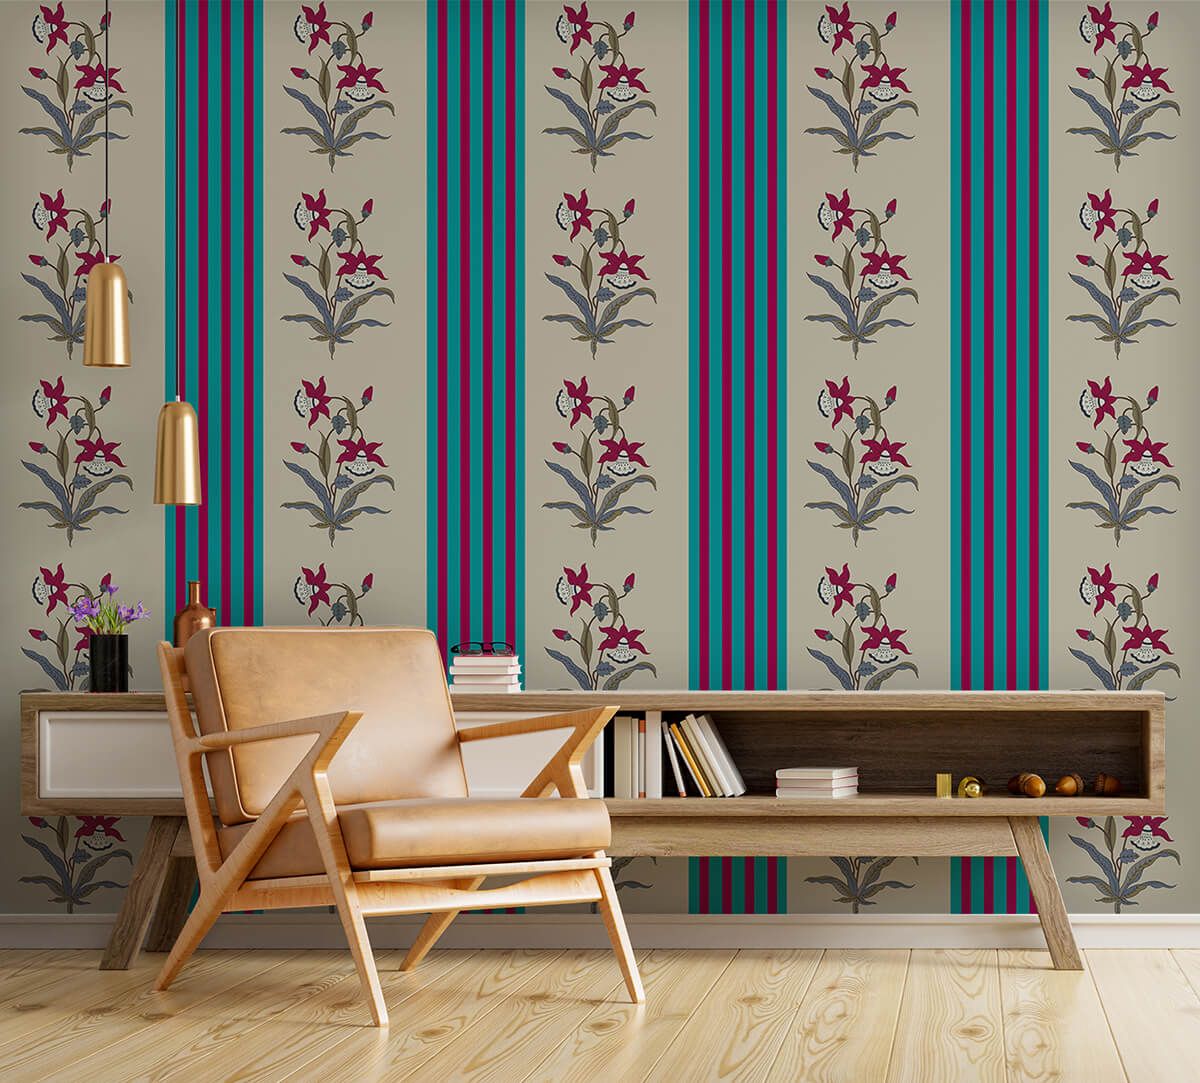 Radha Krishna Colorful Wallpaper for Your Home Wall - Magic Decor ®